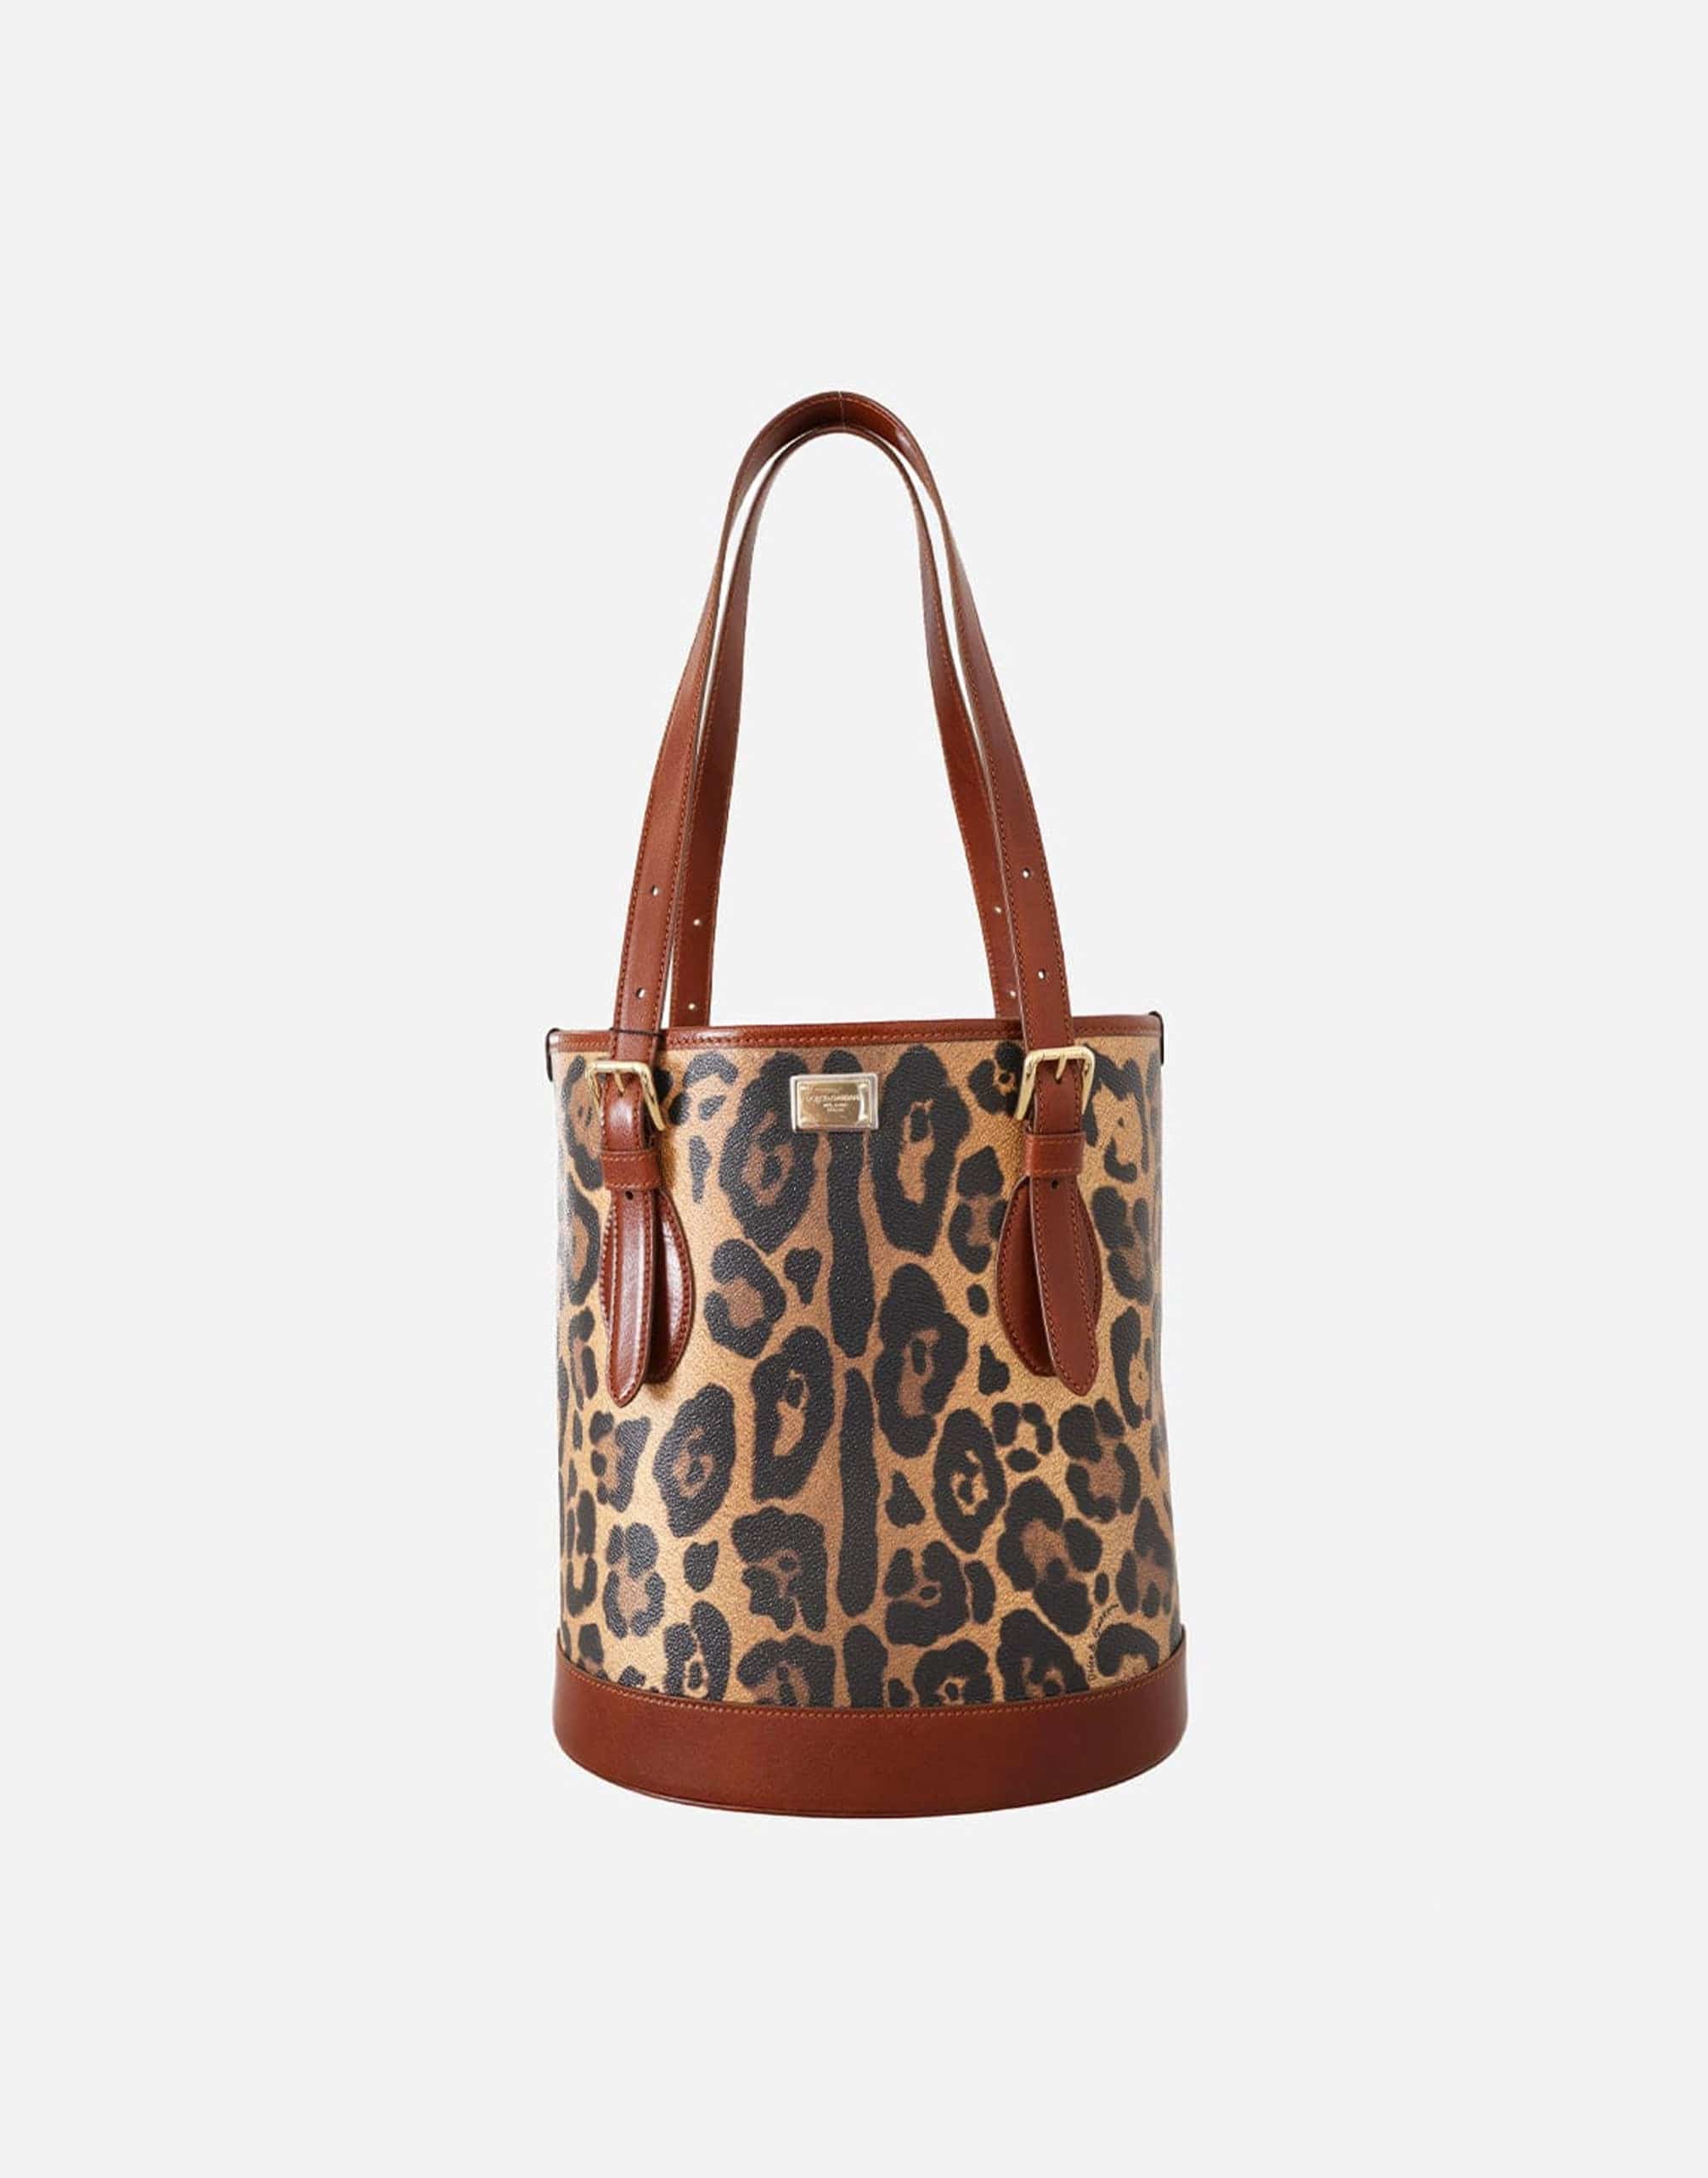 Dolce & Gabbana Leopard-Print Bucket Bag